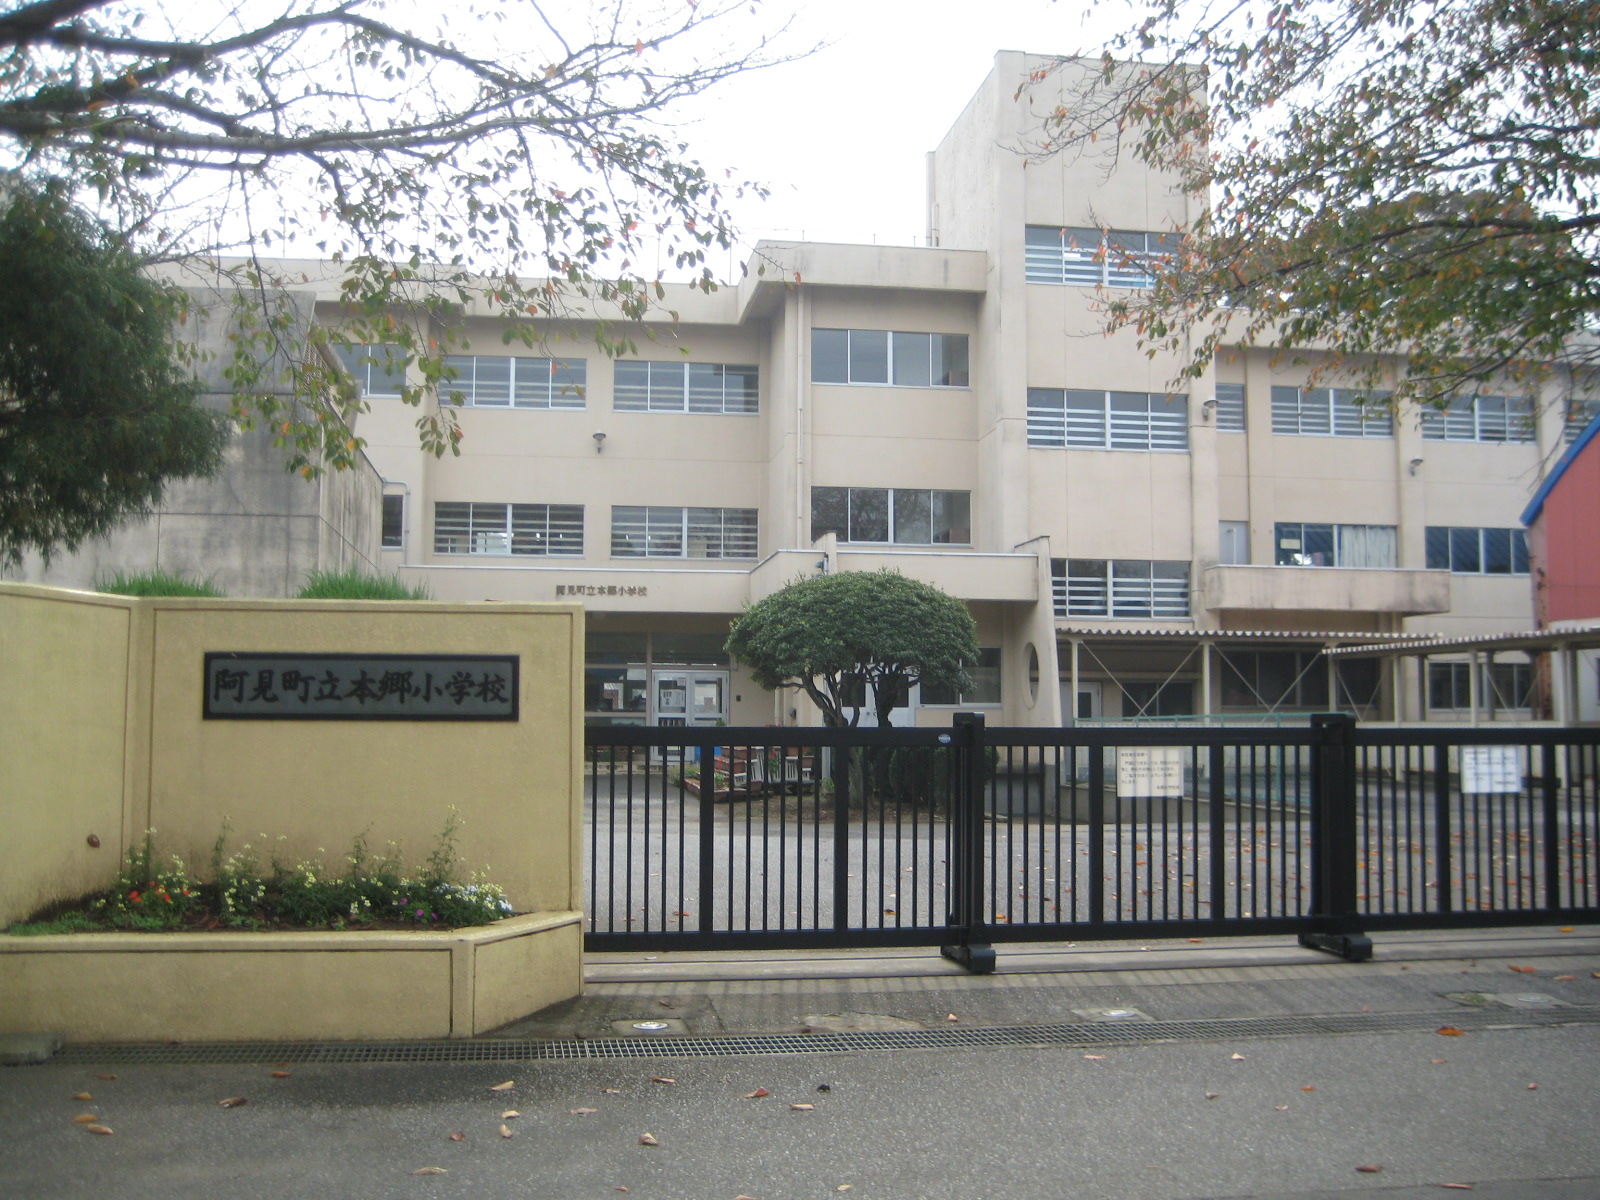 Primary school. Hongo 800m up to elementary school (Ami) (Elementary School)